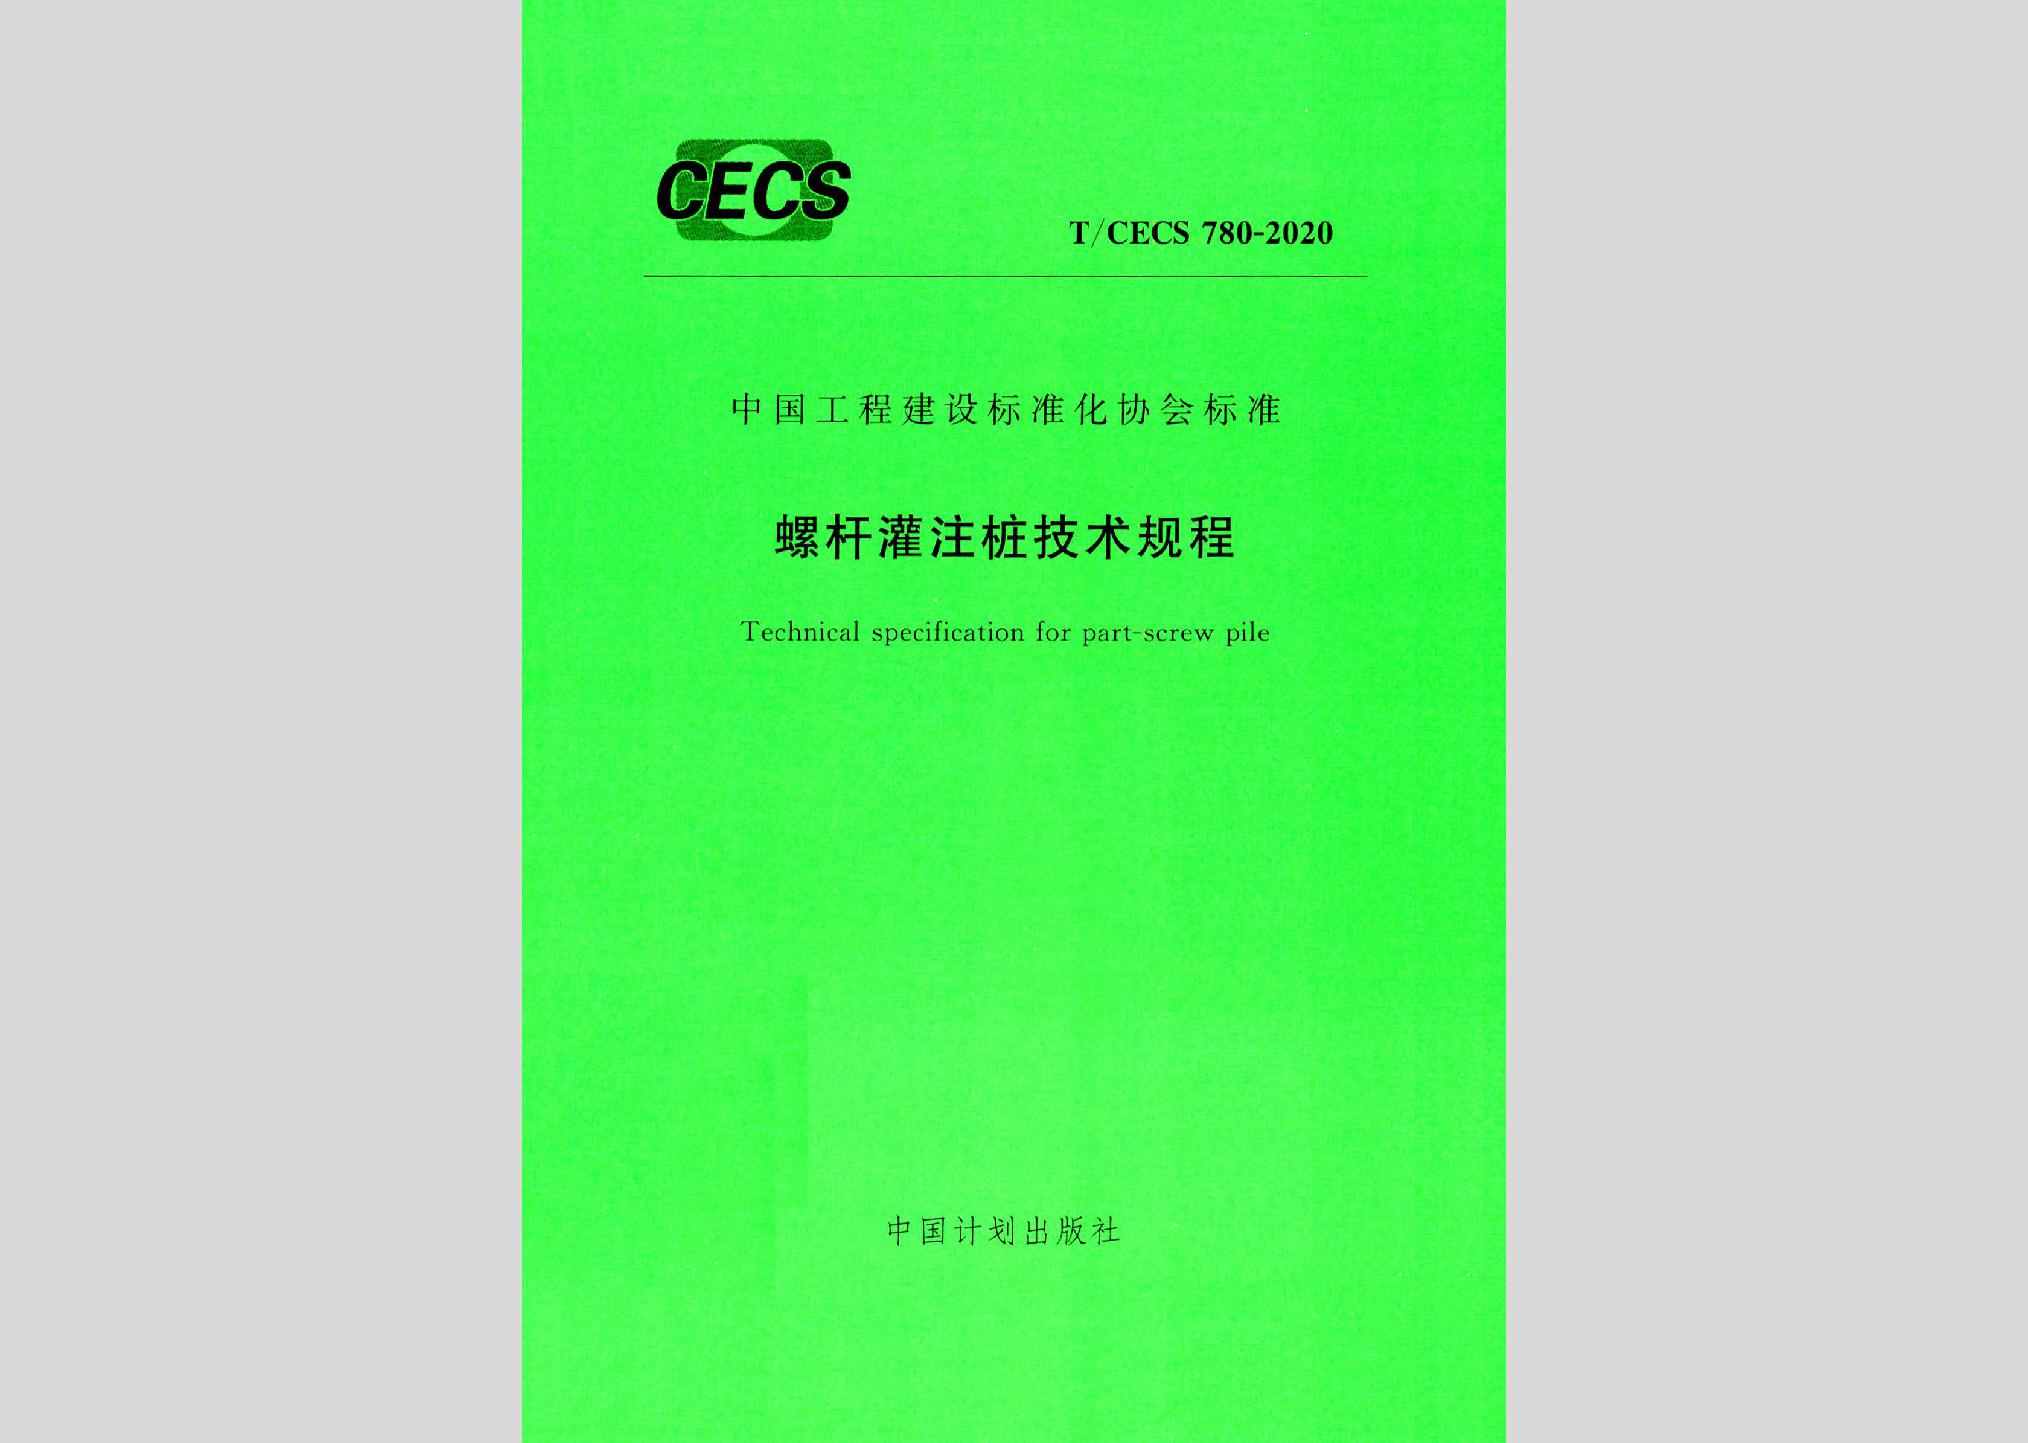 T/CECS780-2020：螺杆灌注桩技术规程